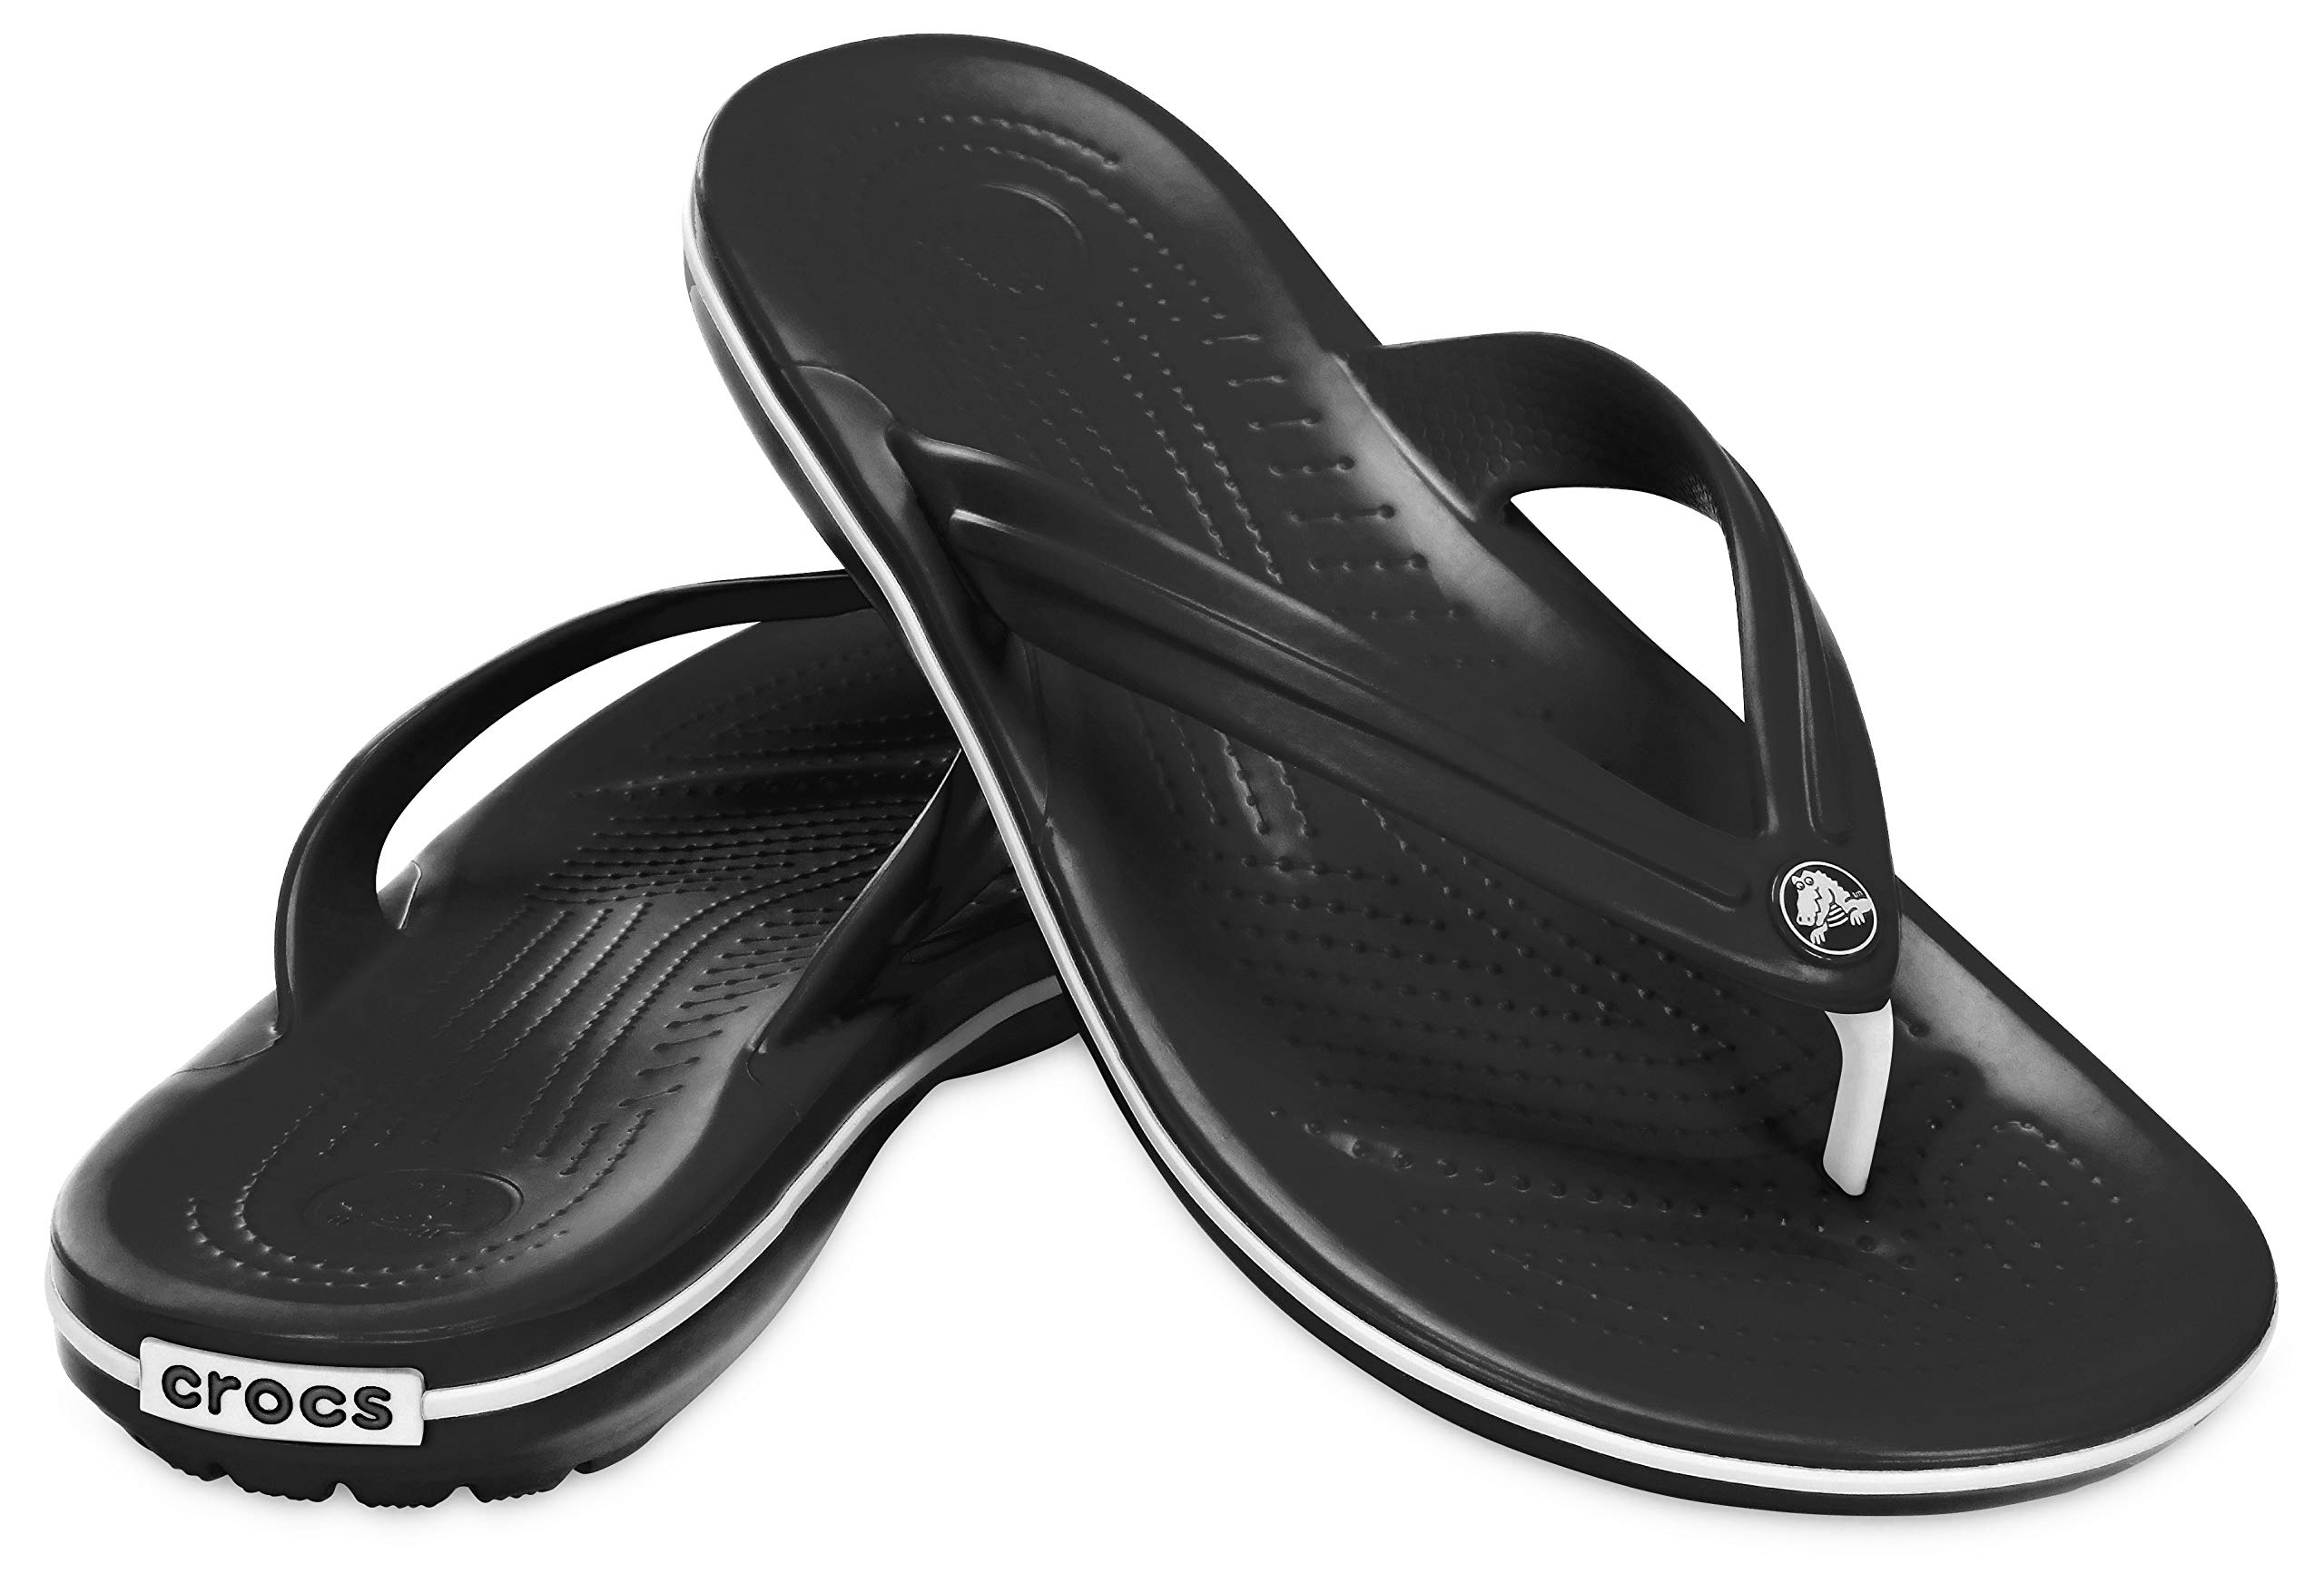 Crocs unisex-adult Crocband Flip Flop | Slip-on Sandals | Shower Shoes